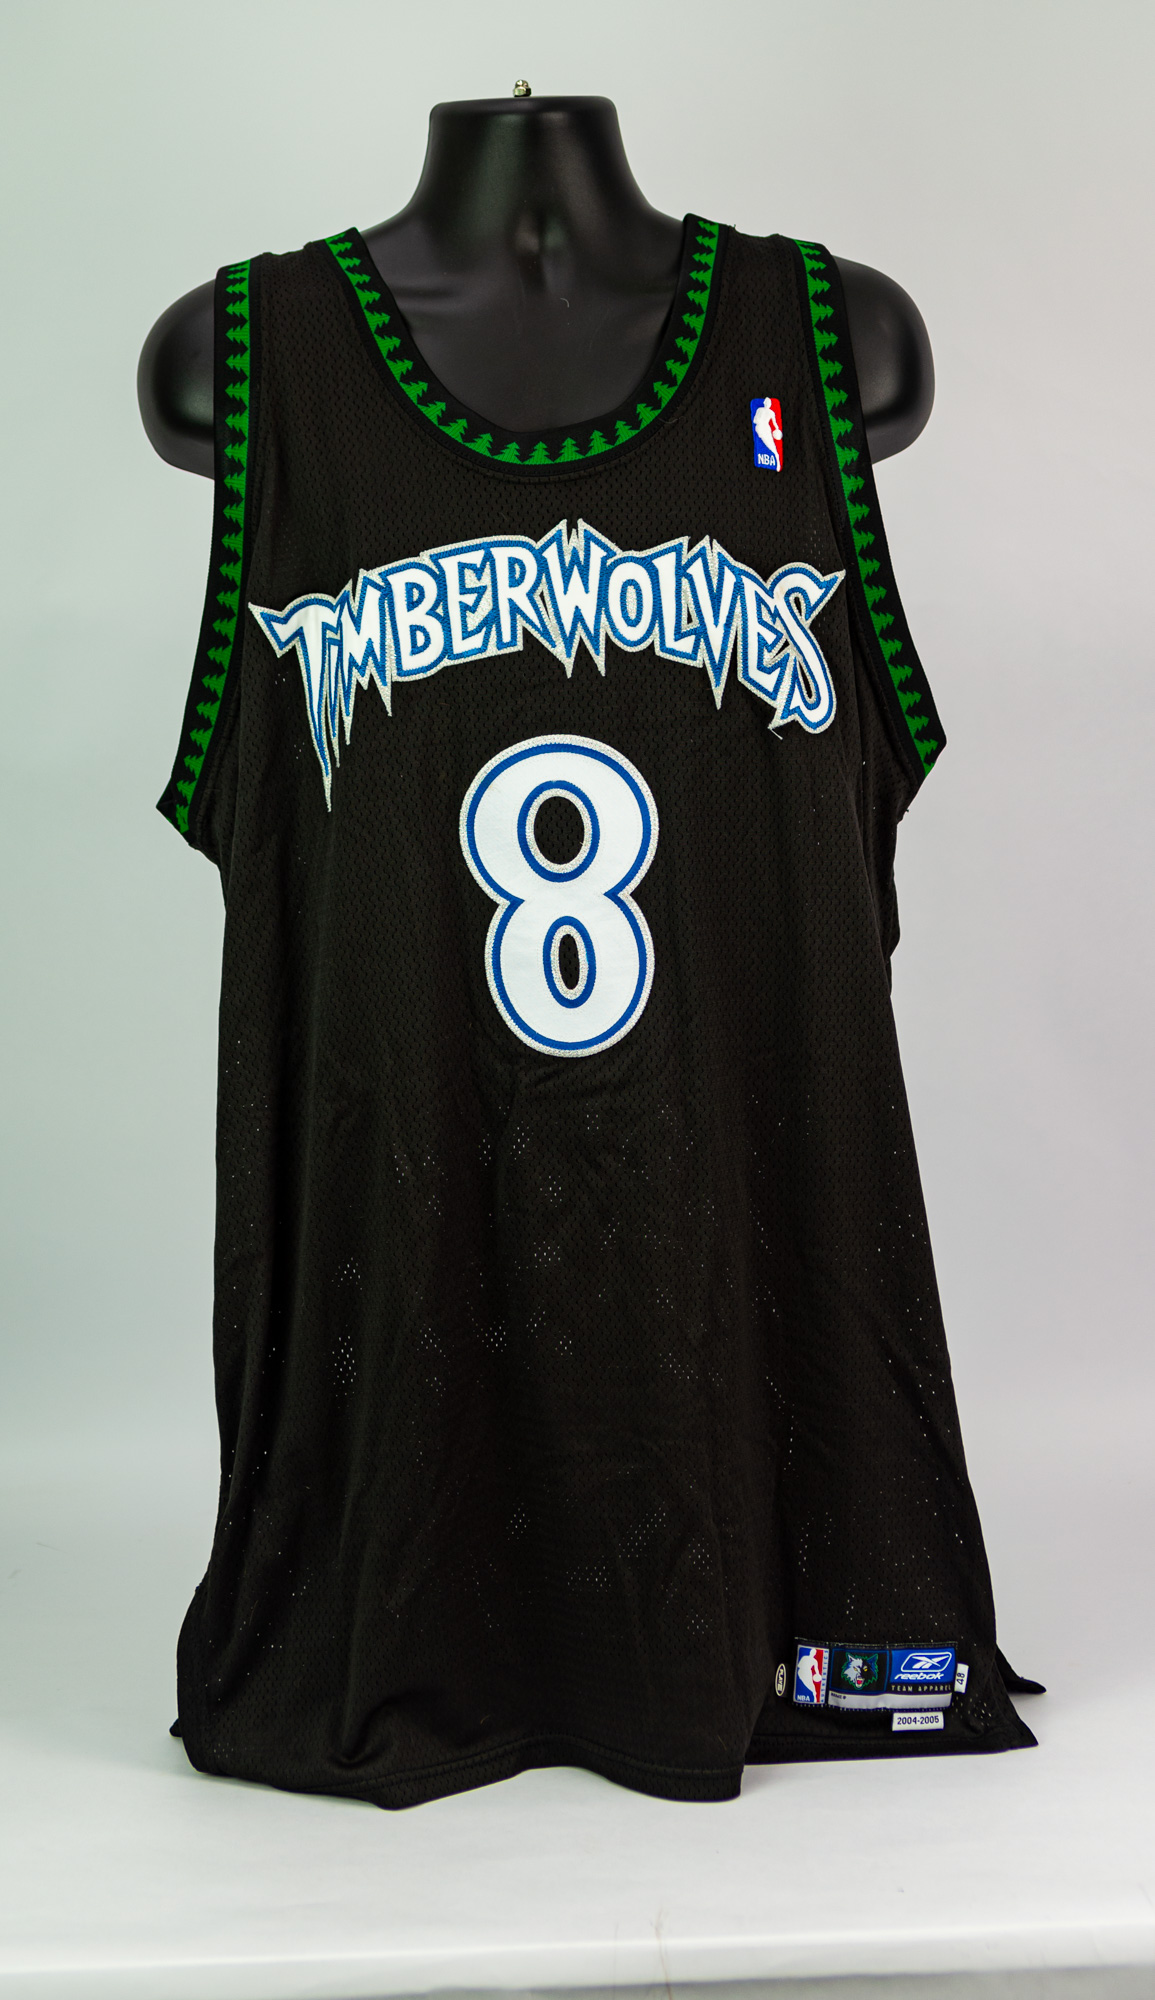 sprewell timberwolves jersey